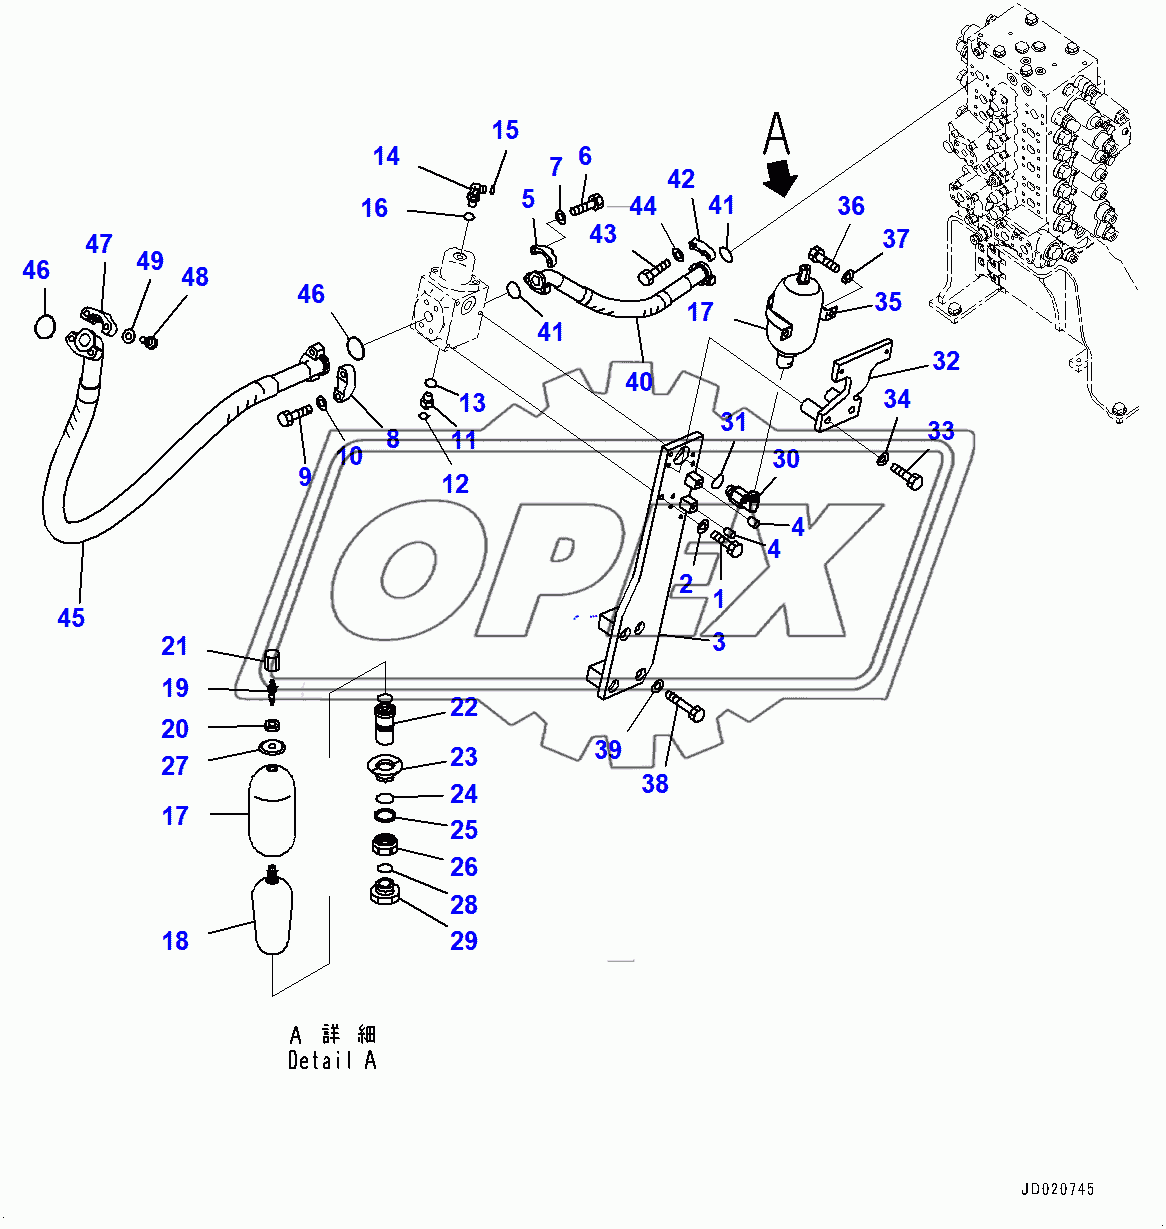  Actuator Piping, Main Piping, R.H. (400001-400072) 1